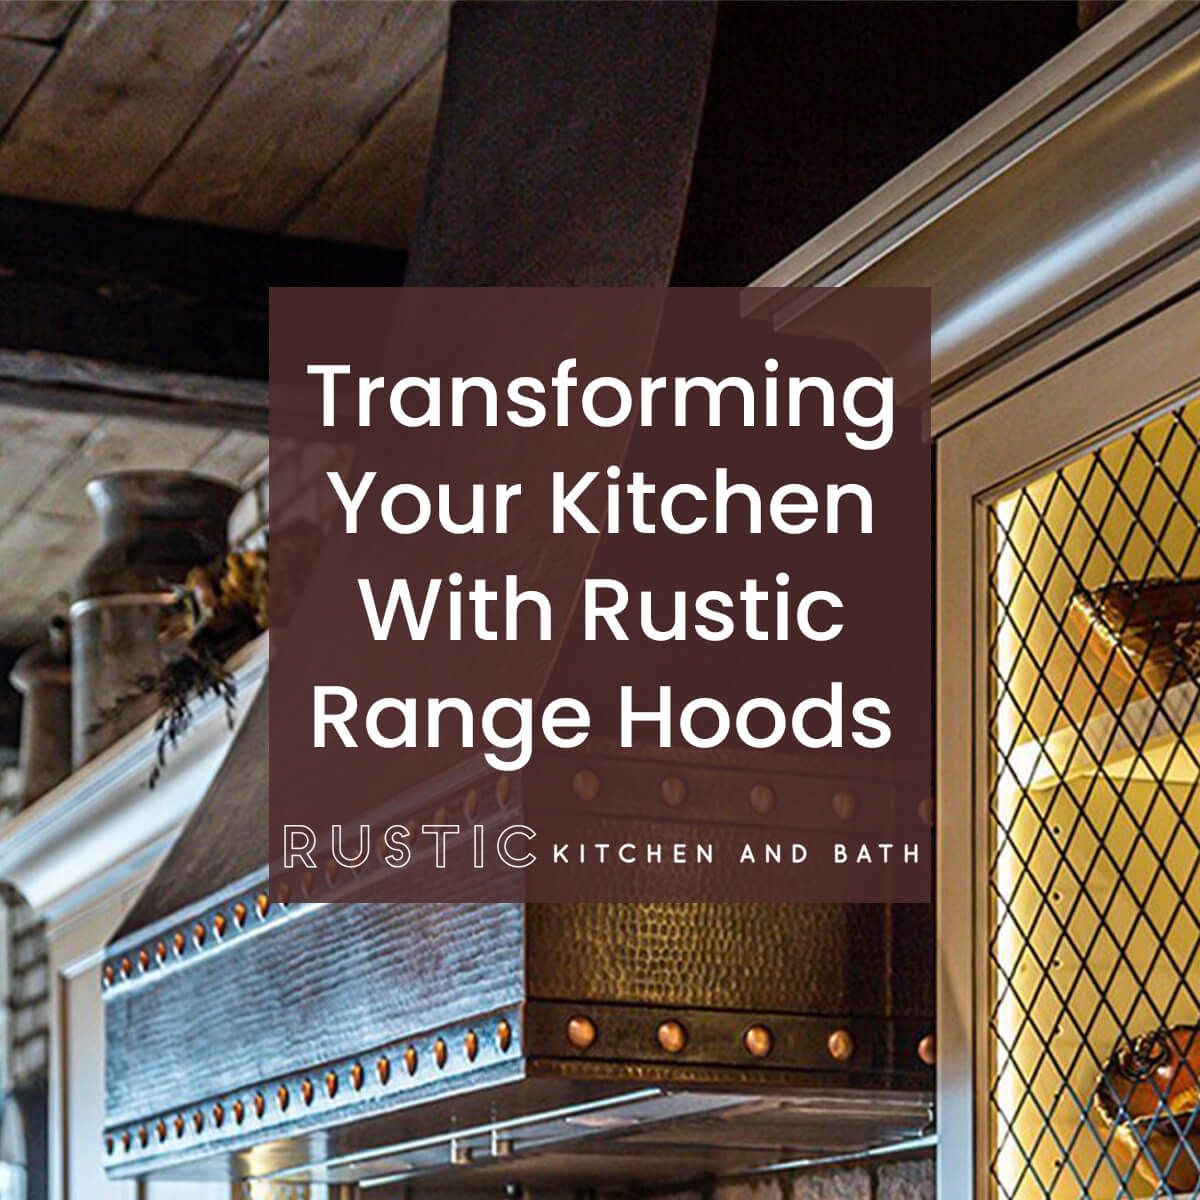 Rustic Range Hoods - Transforming Your Kitchen